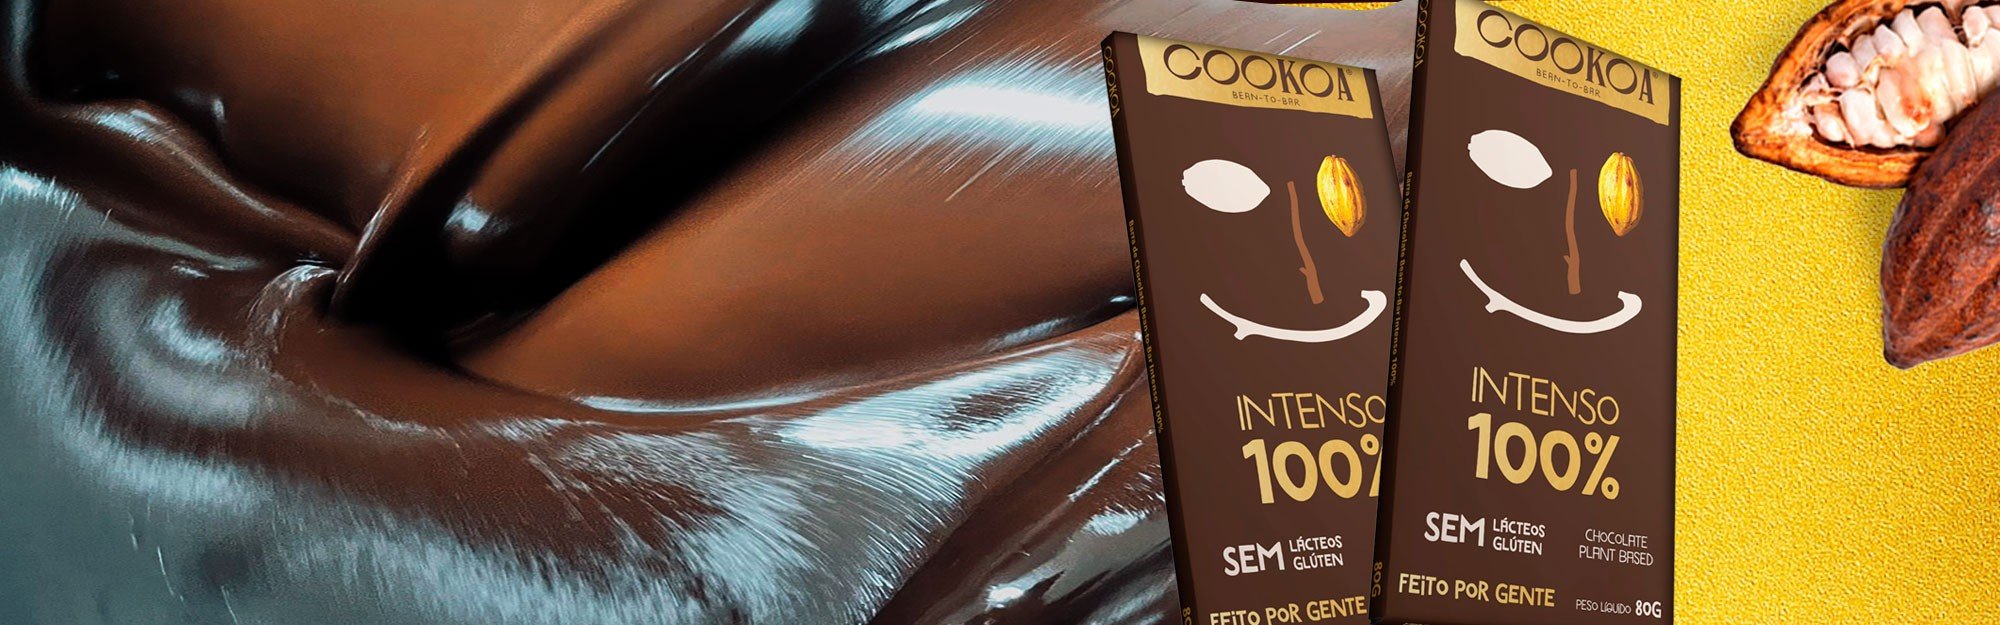 banner chocolate intenso 100 cookoa